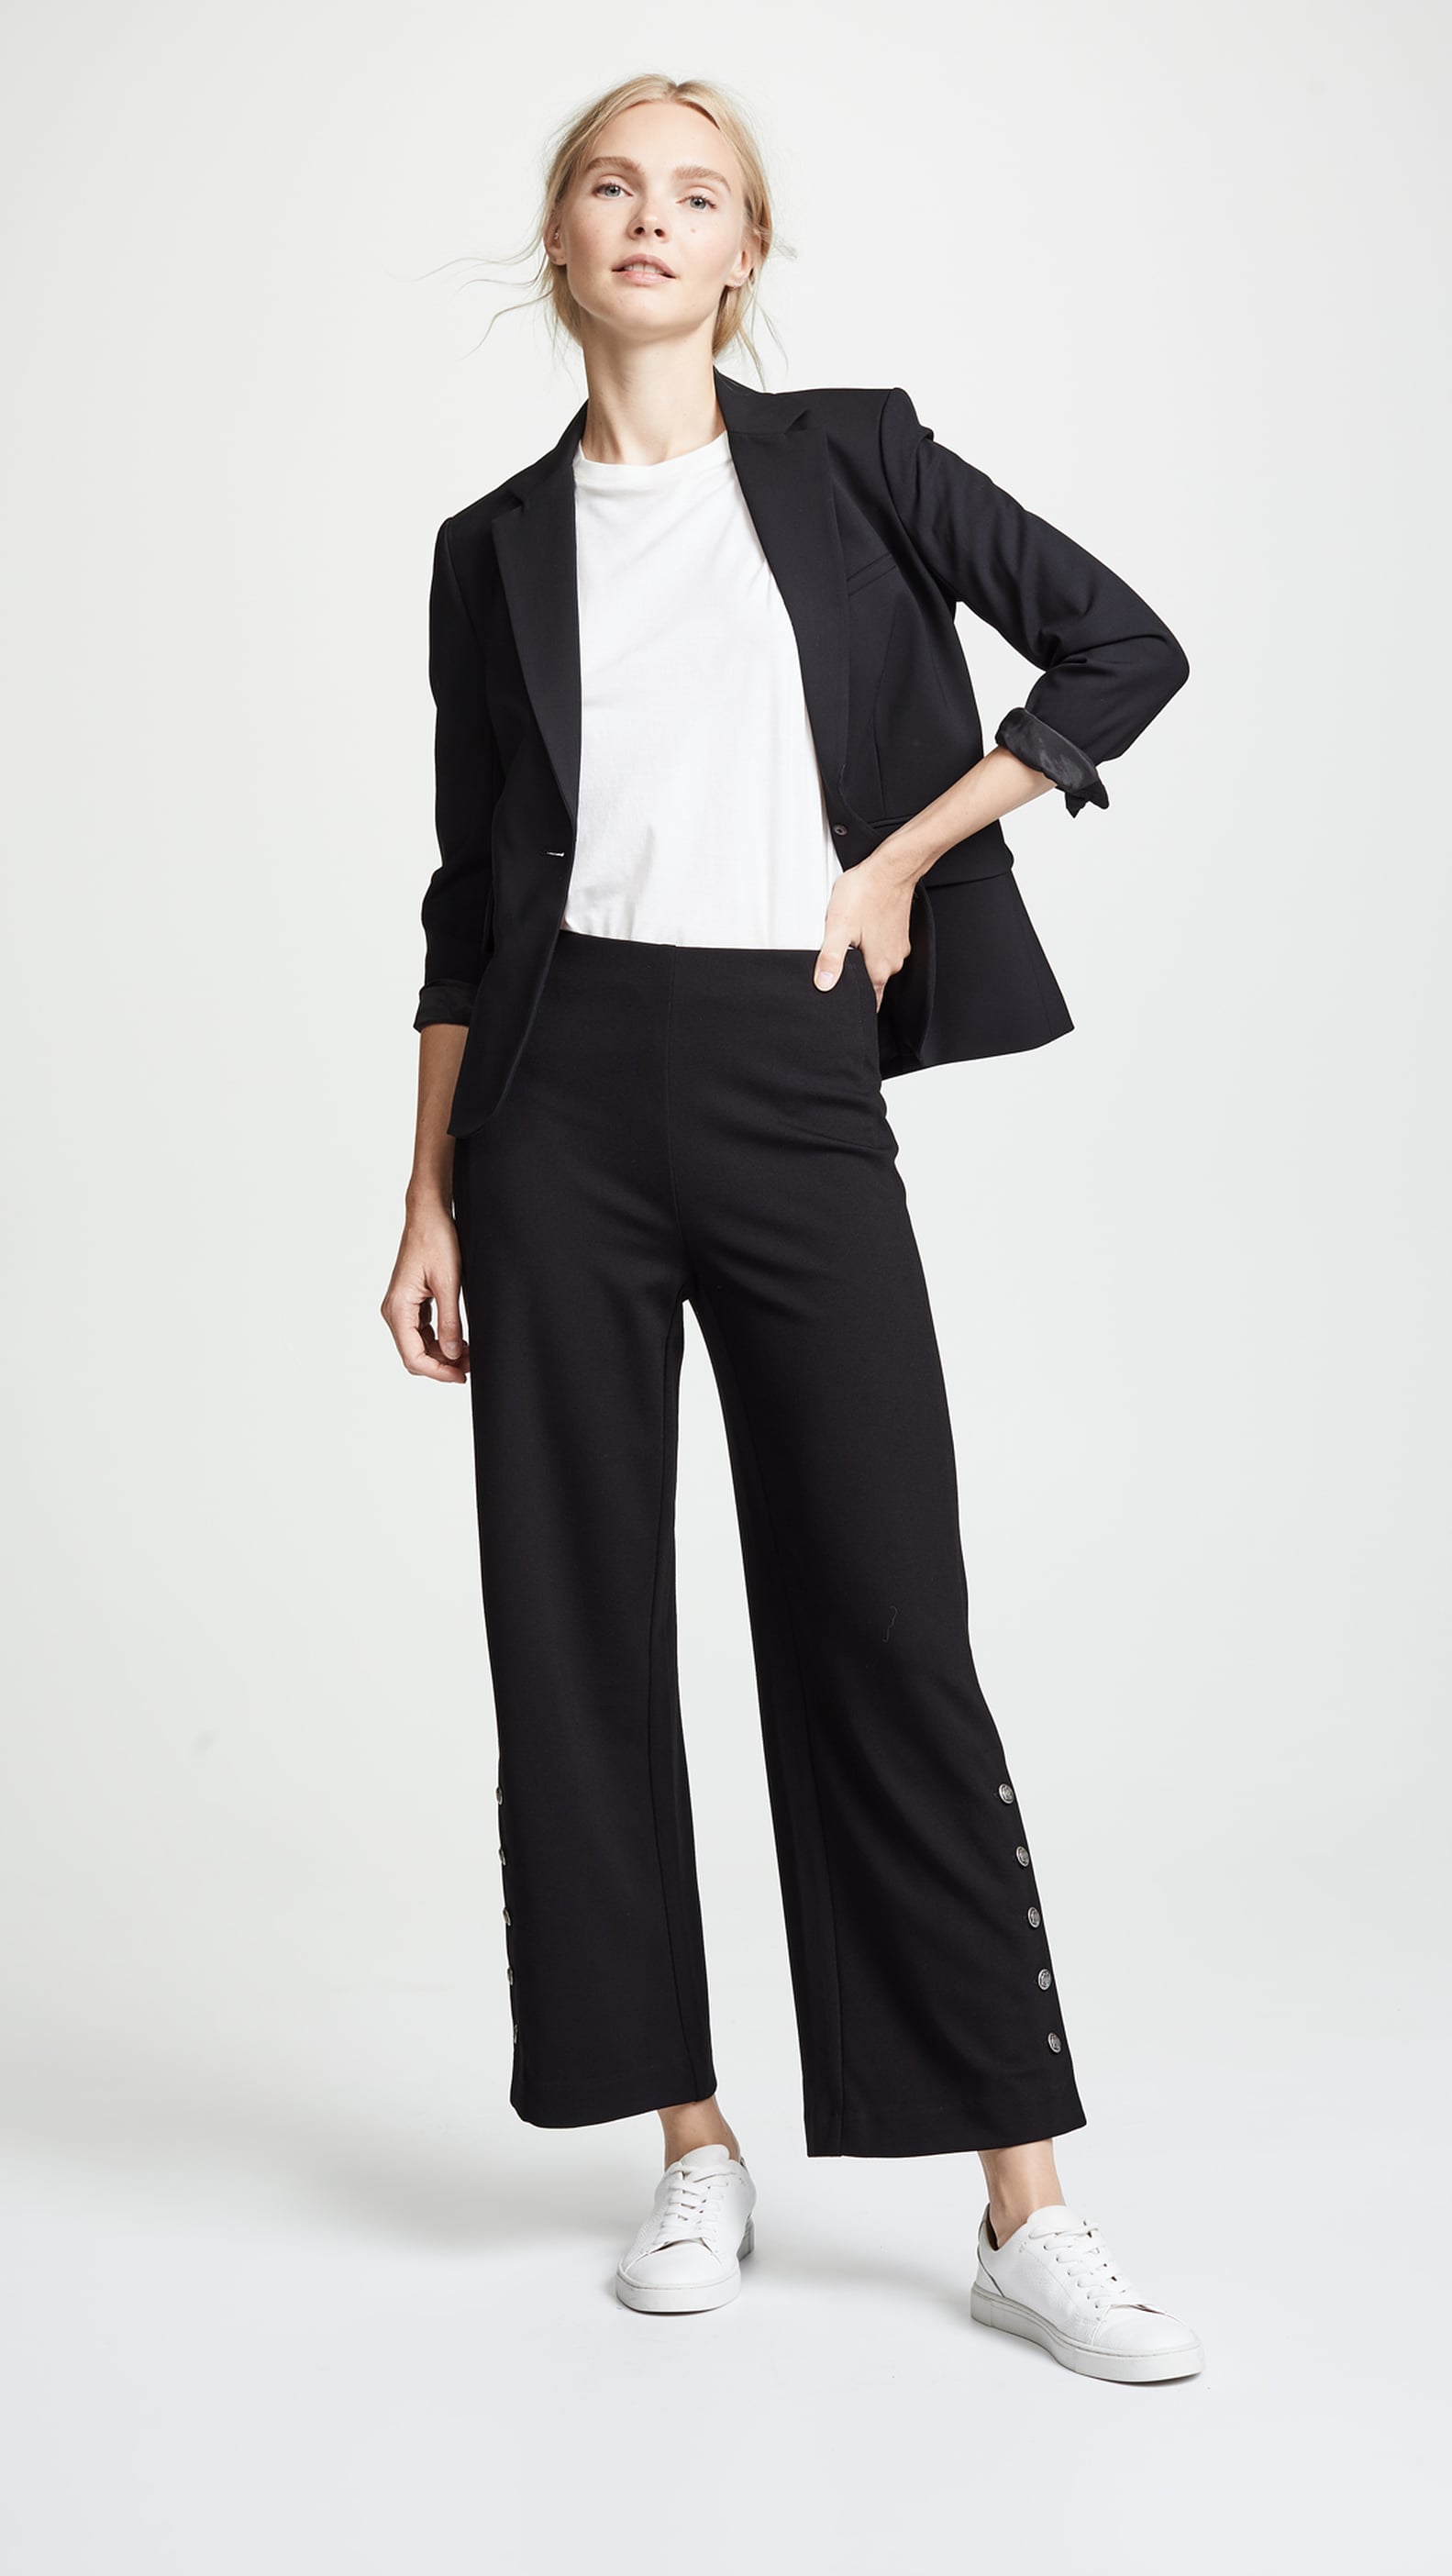 Best Black Pants For Women | POPSUGAR Fashion